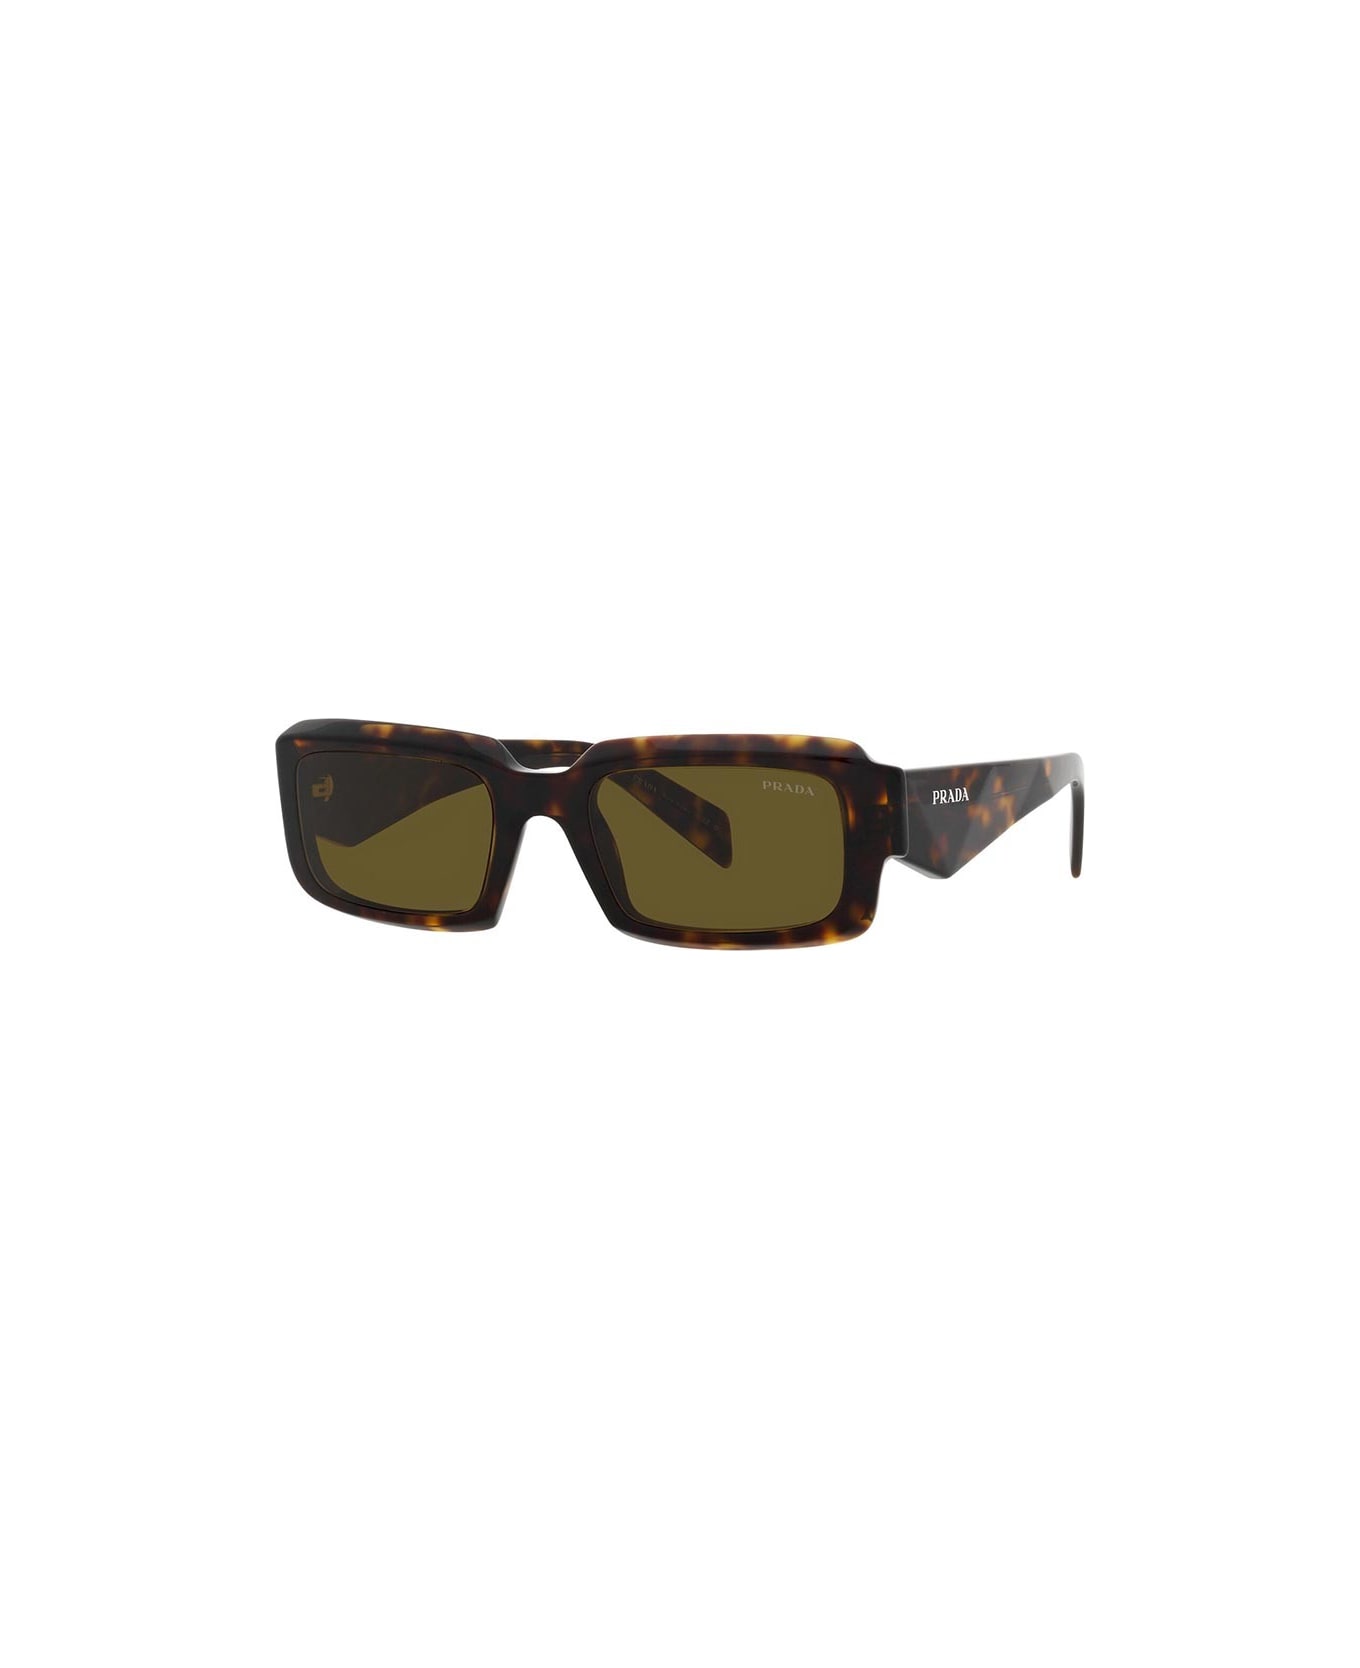 Prada Eyewear Sunglasses - 19J09Z